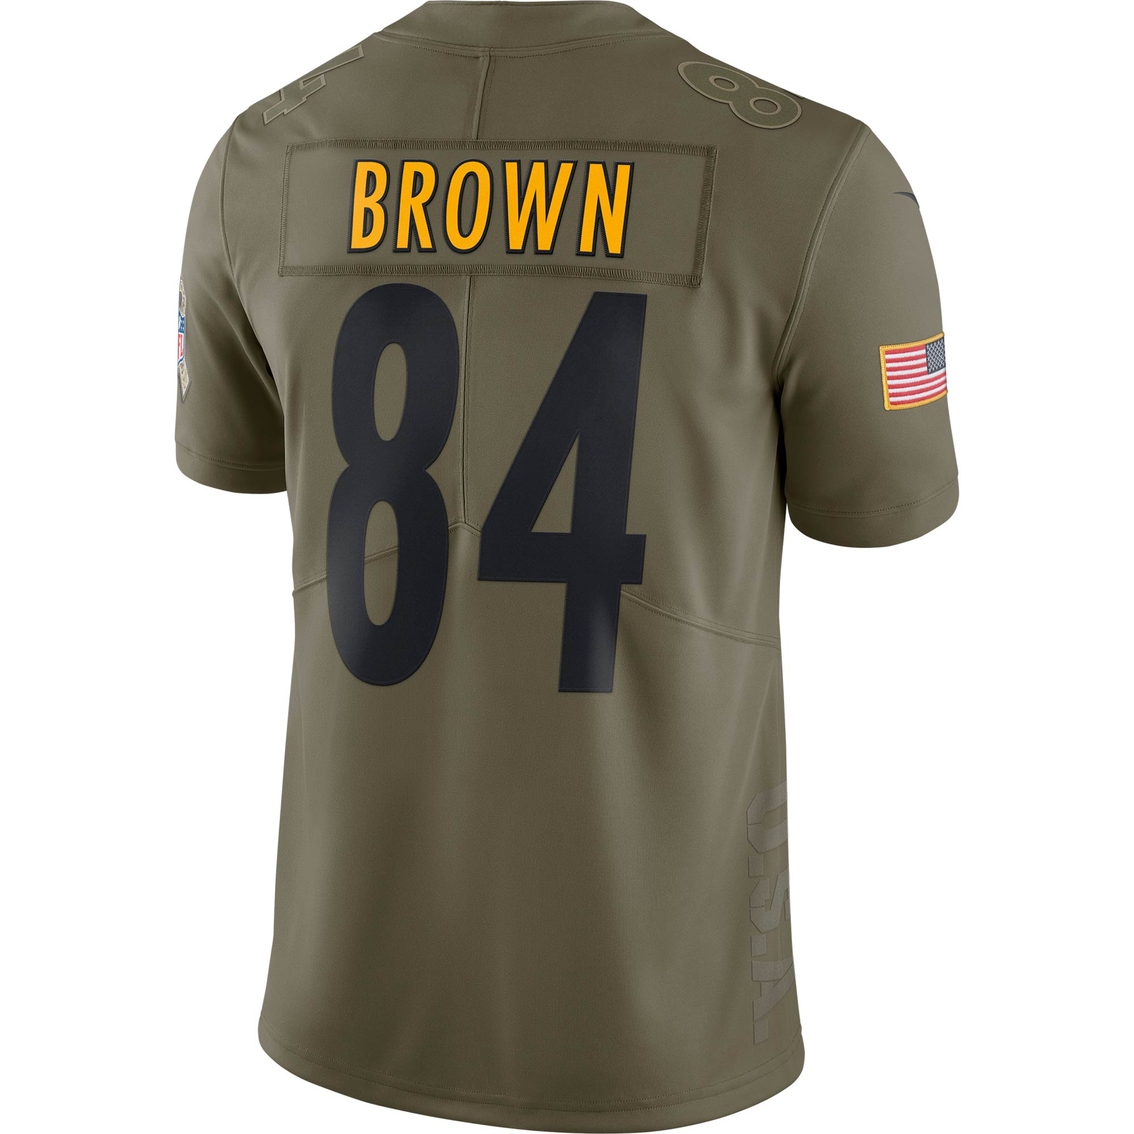 Nike NFL Pittsburgh Steelers Brown Jersey - Image 2 of 2